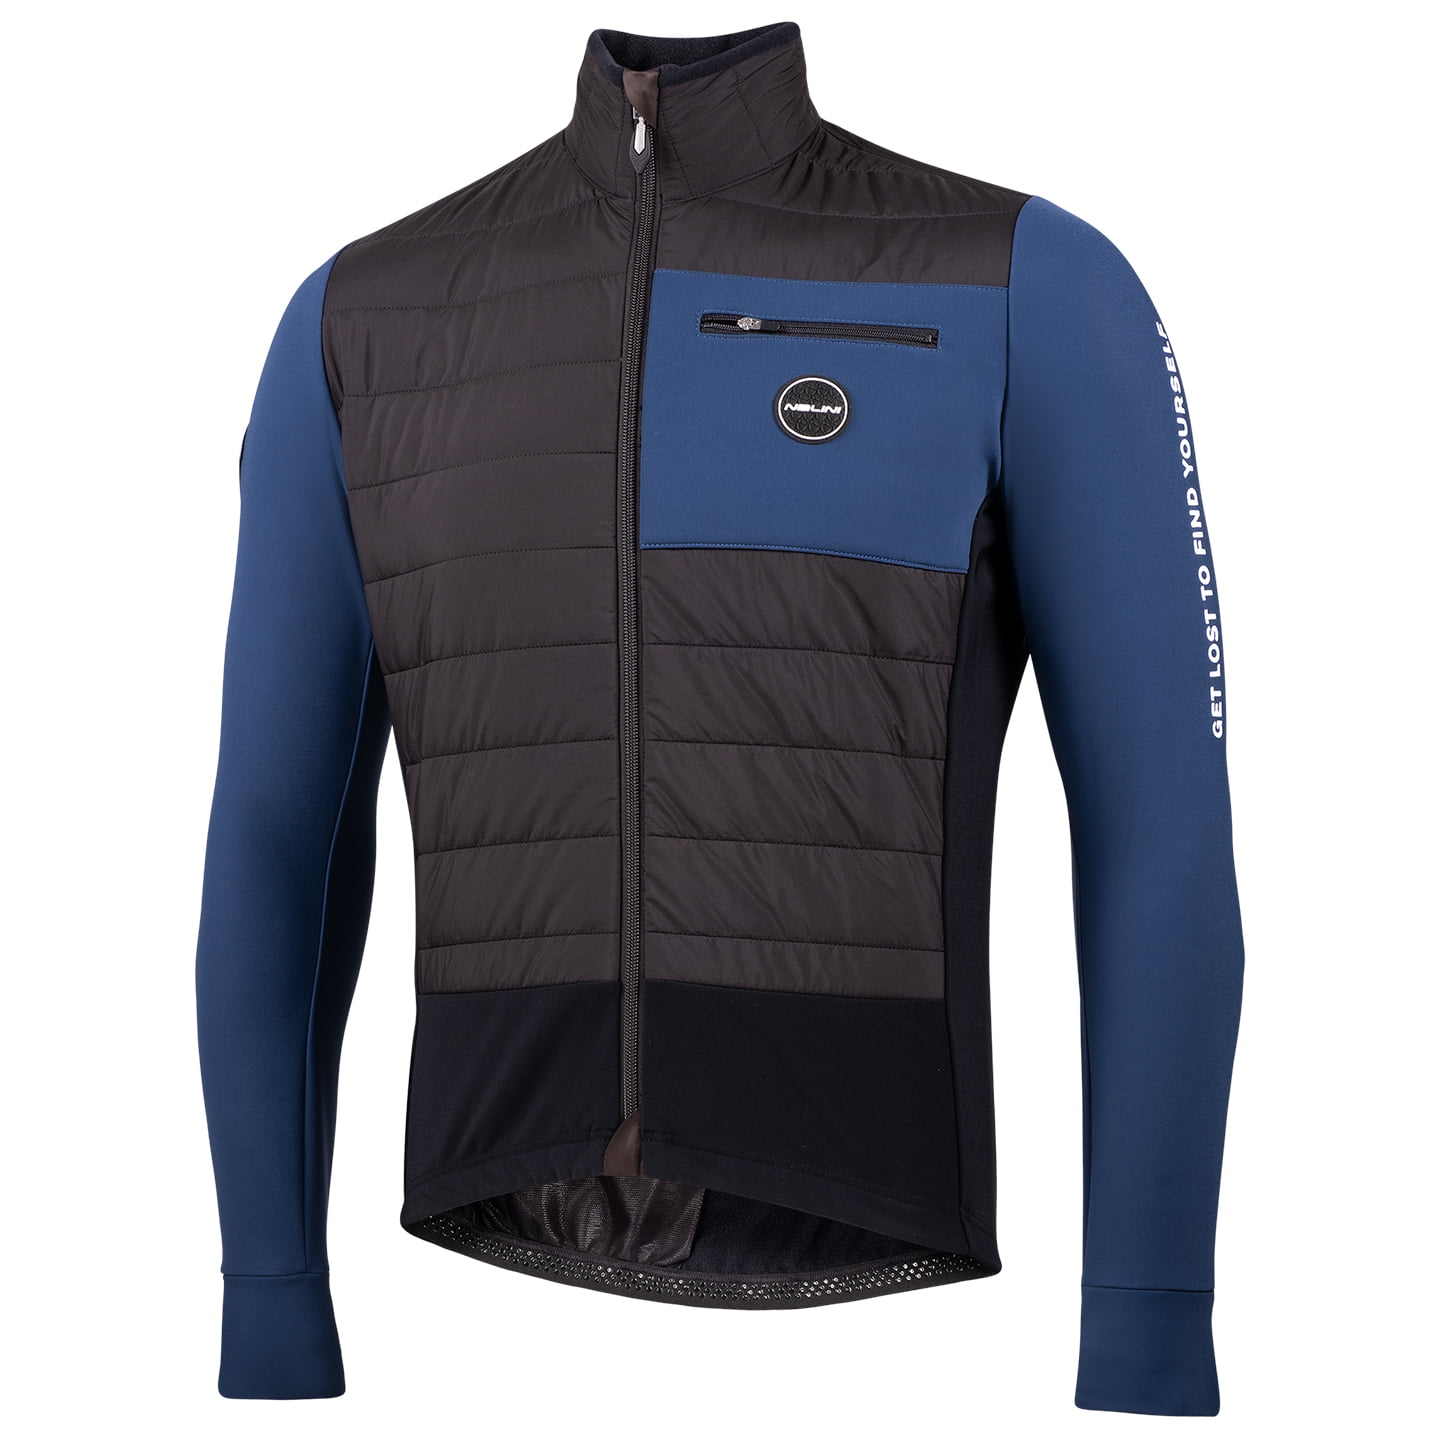 NALINI winter jacket Freedom Thermal Jacket, for men, size 2XL, Winter jacket, Cycling clothing